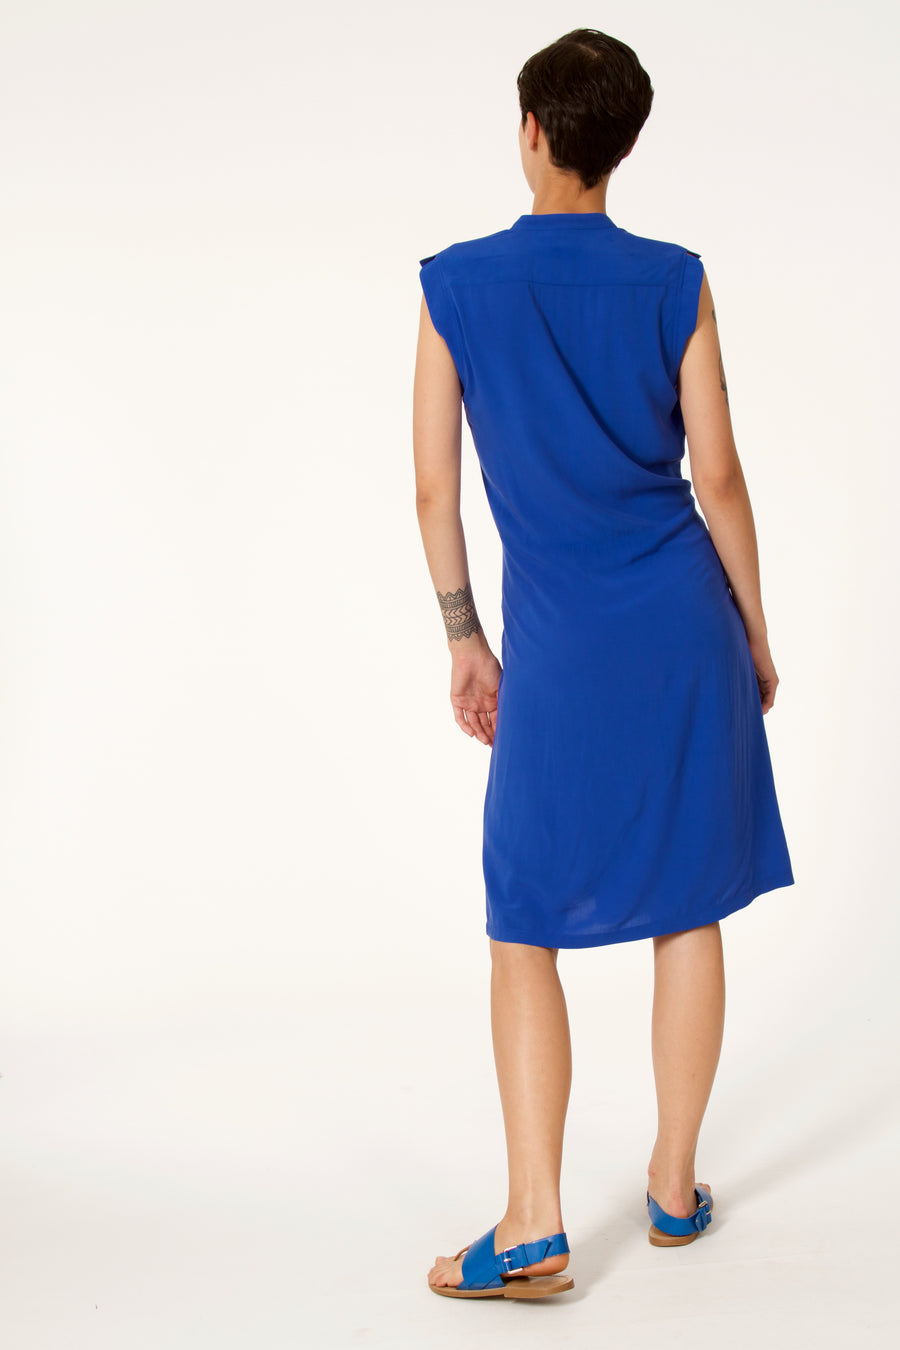 COLUMBIA Blue Dress